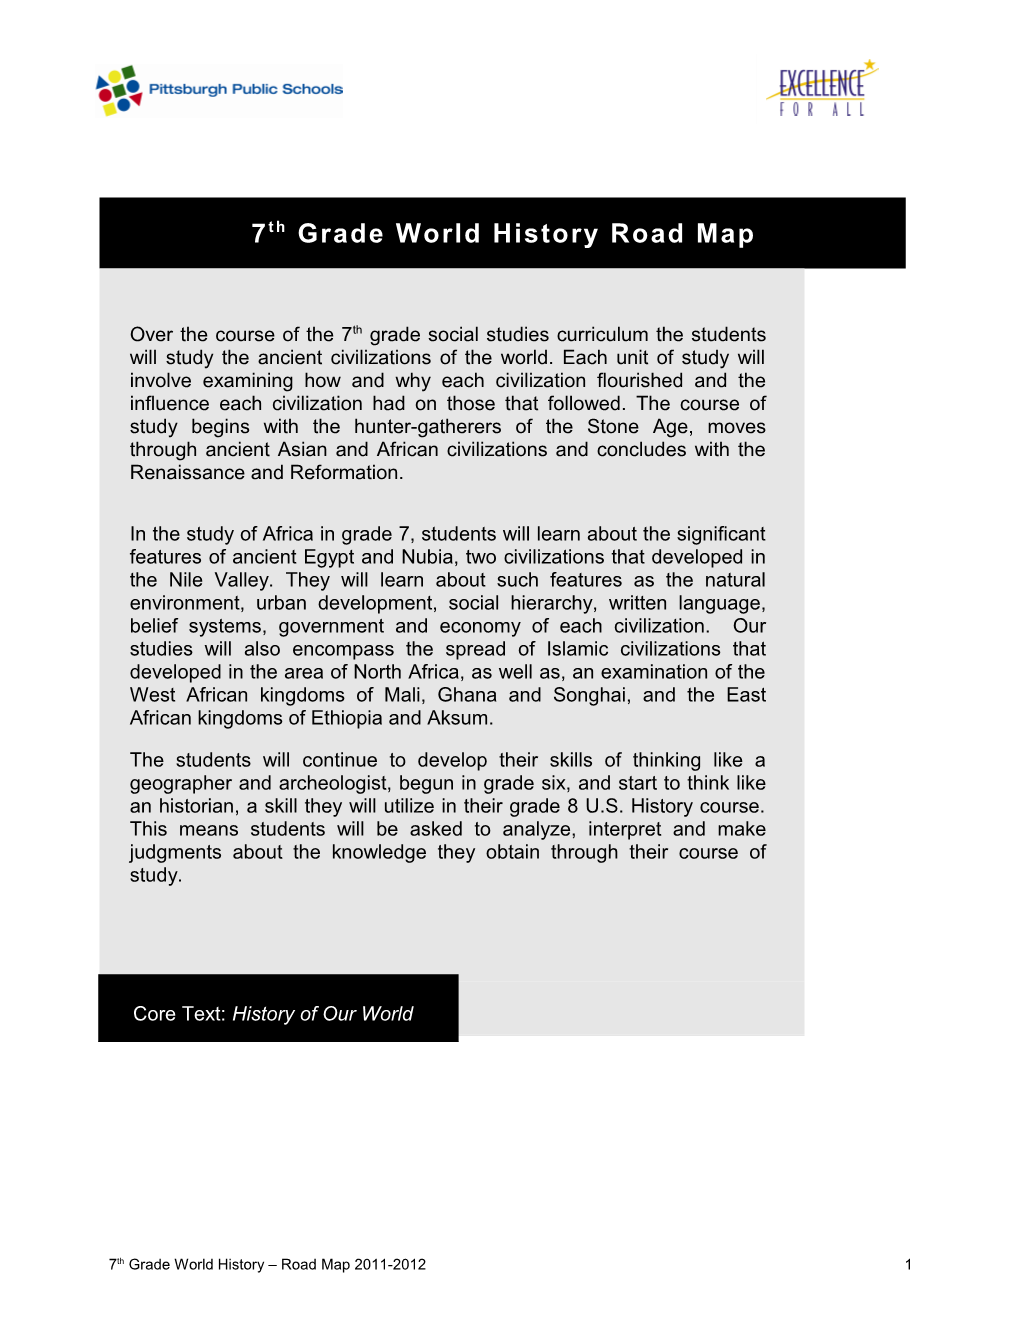 7Th Grade World History Road Map 2011-2012